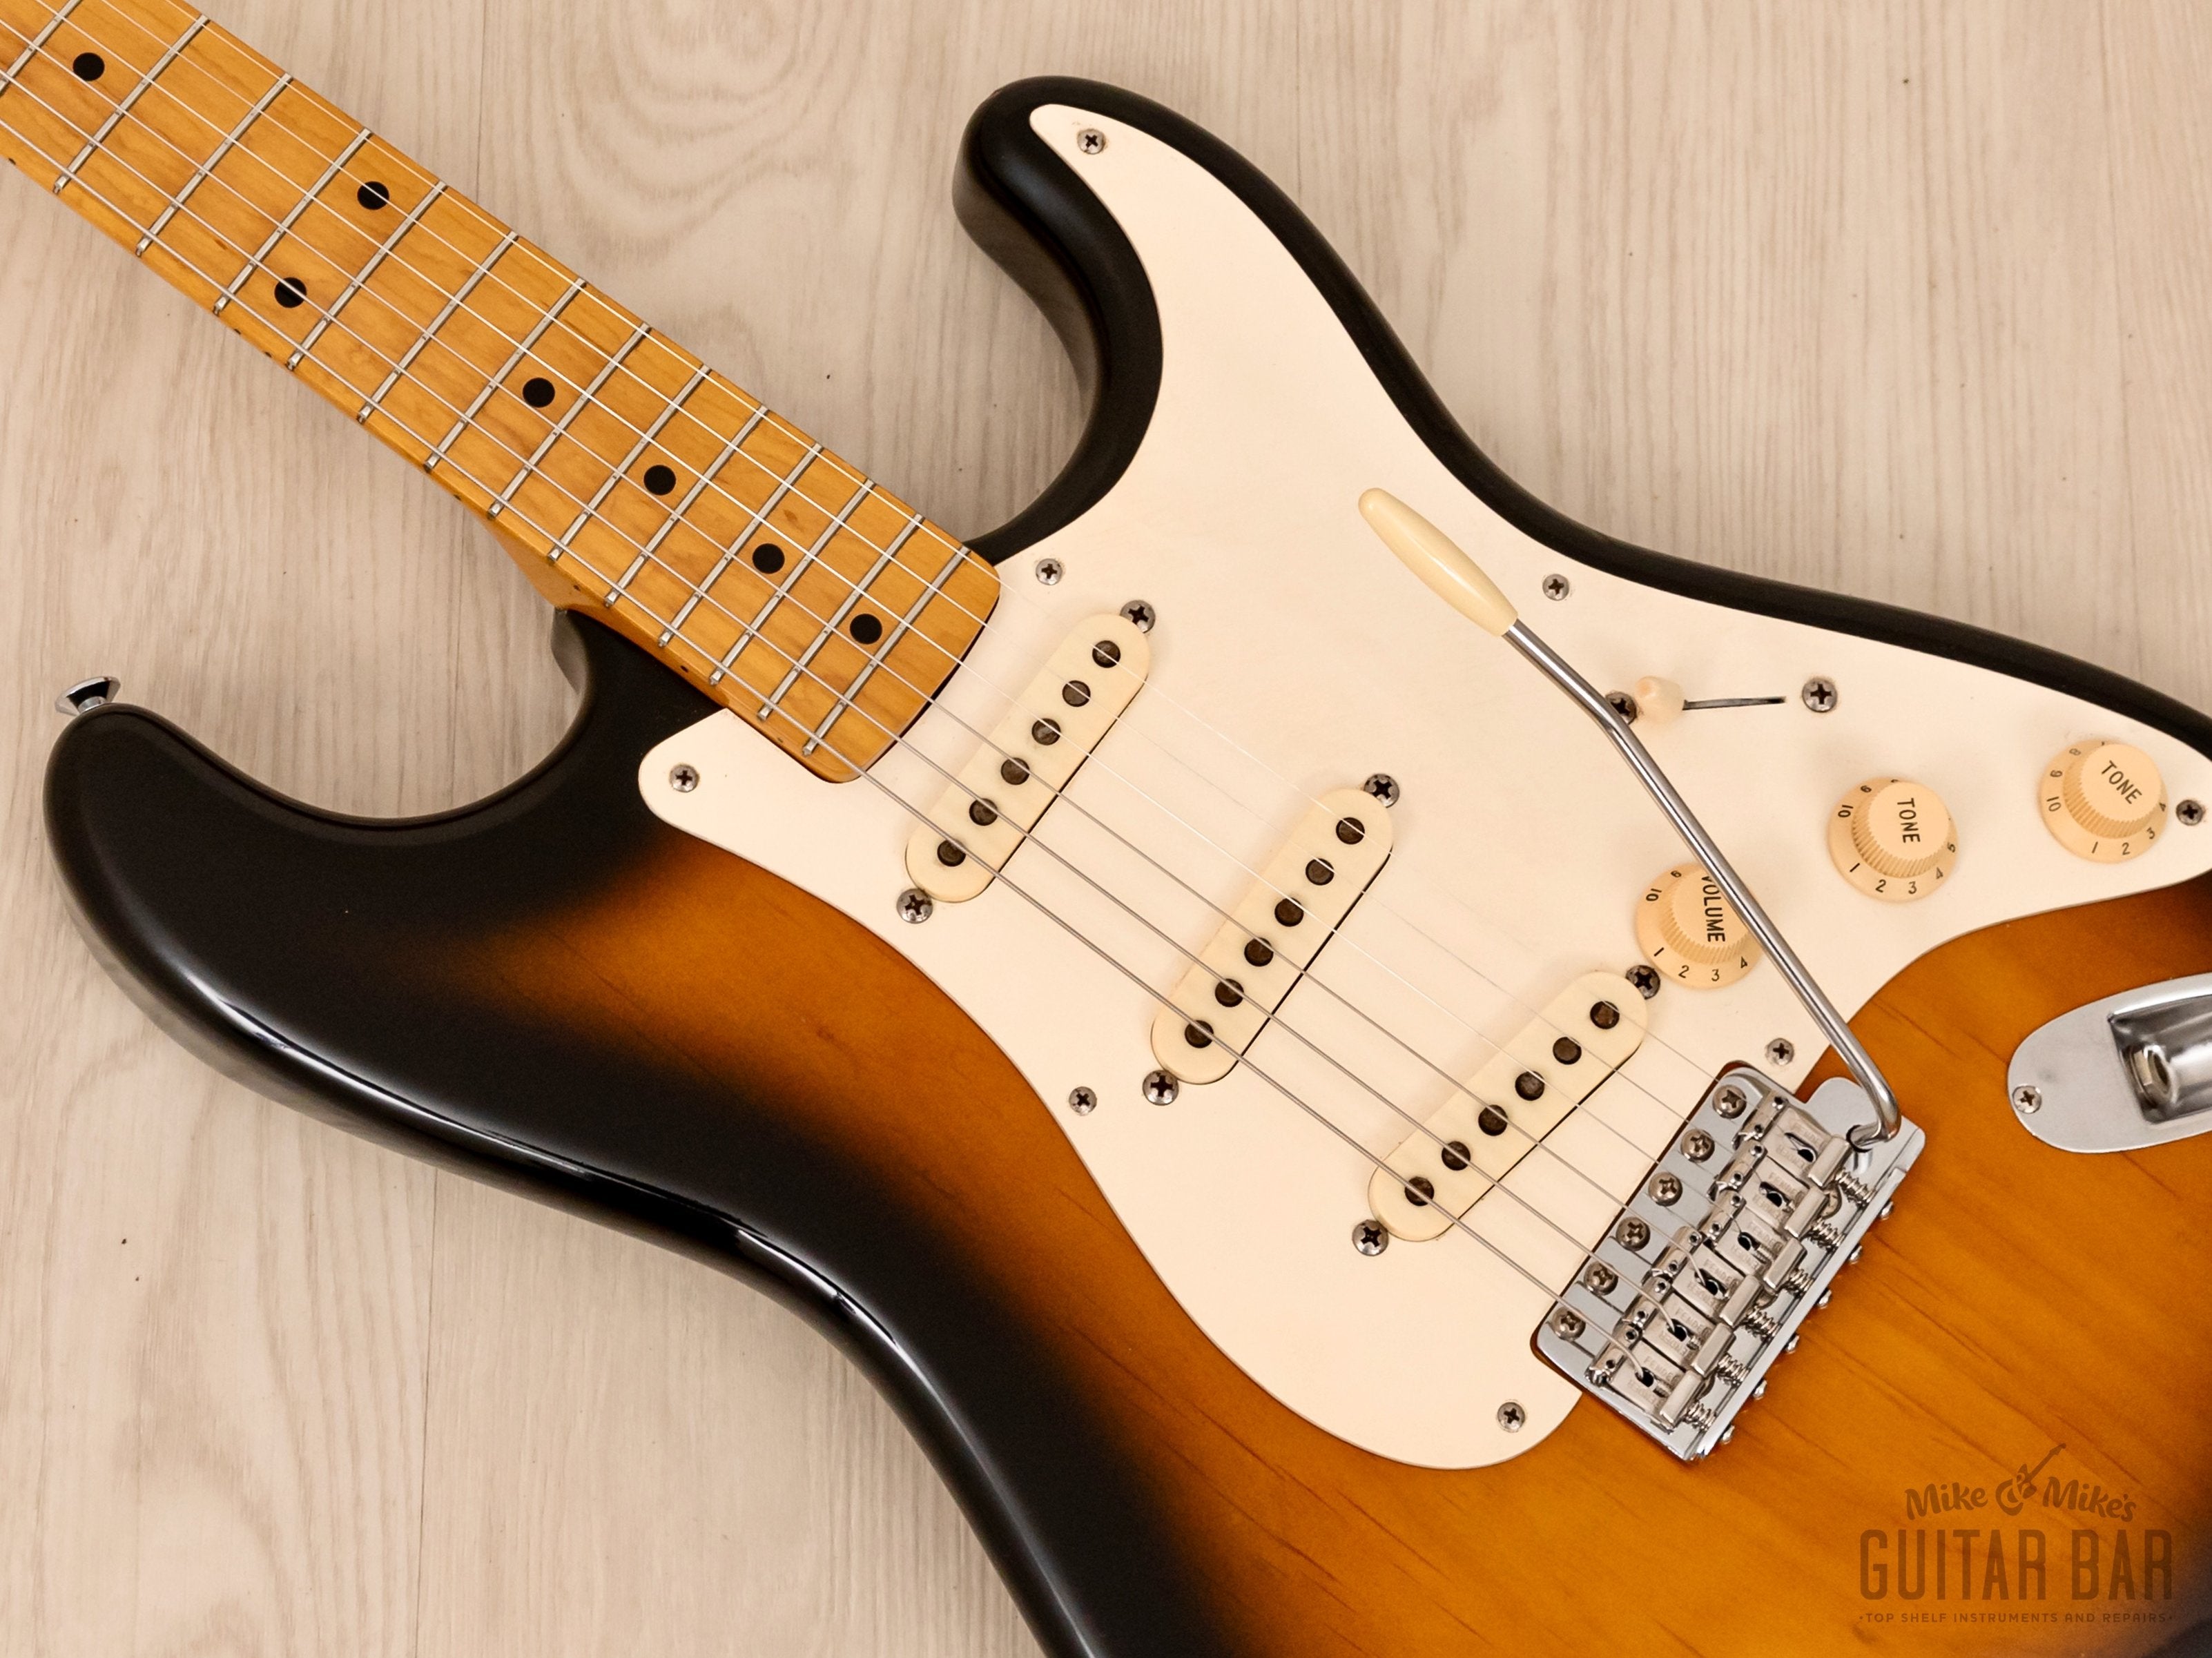 1989 Fender Stratocaster ‘57 Vintage Reissue ST57-900 Sunburst Lacquer & USA Pickups, Japan MIJ Fujigen